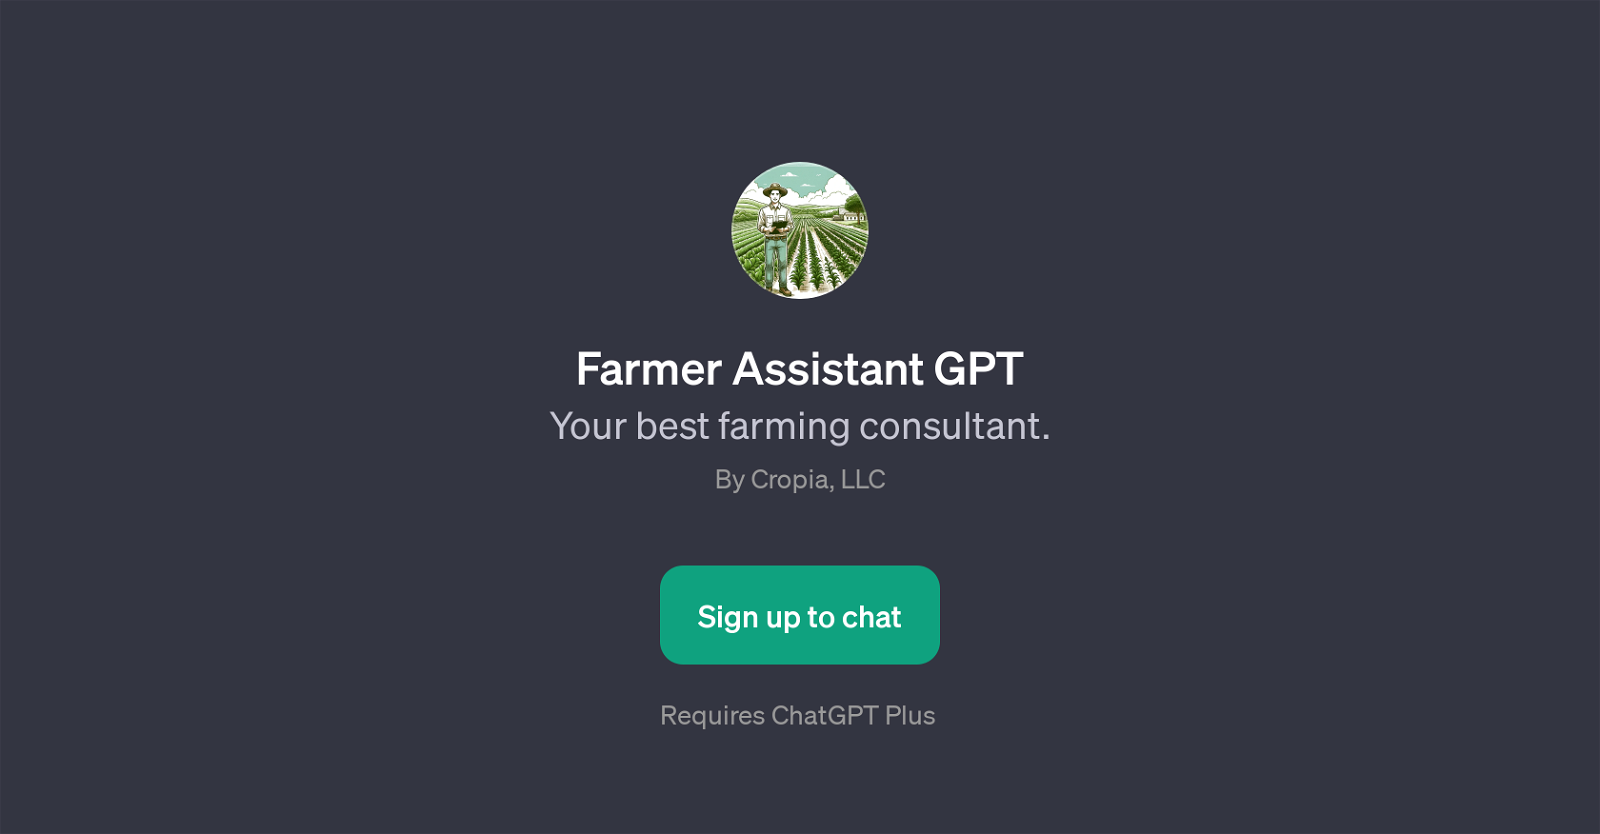 Farmer Assistant GPT website